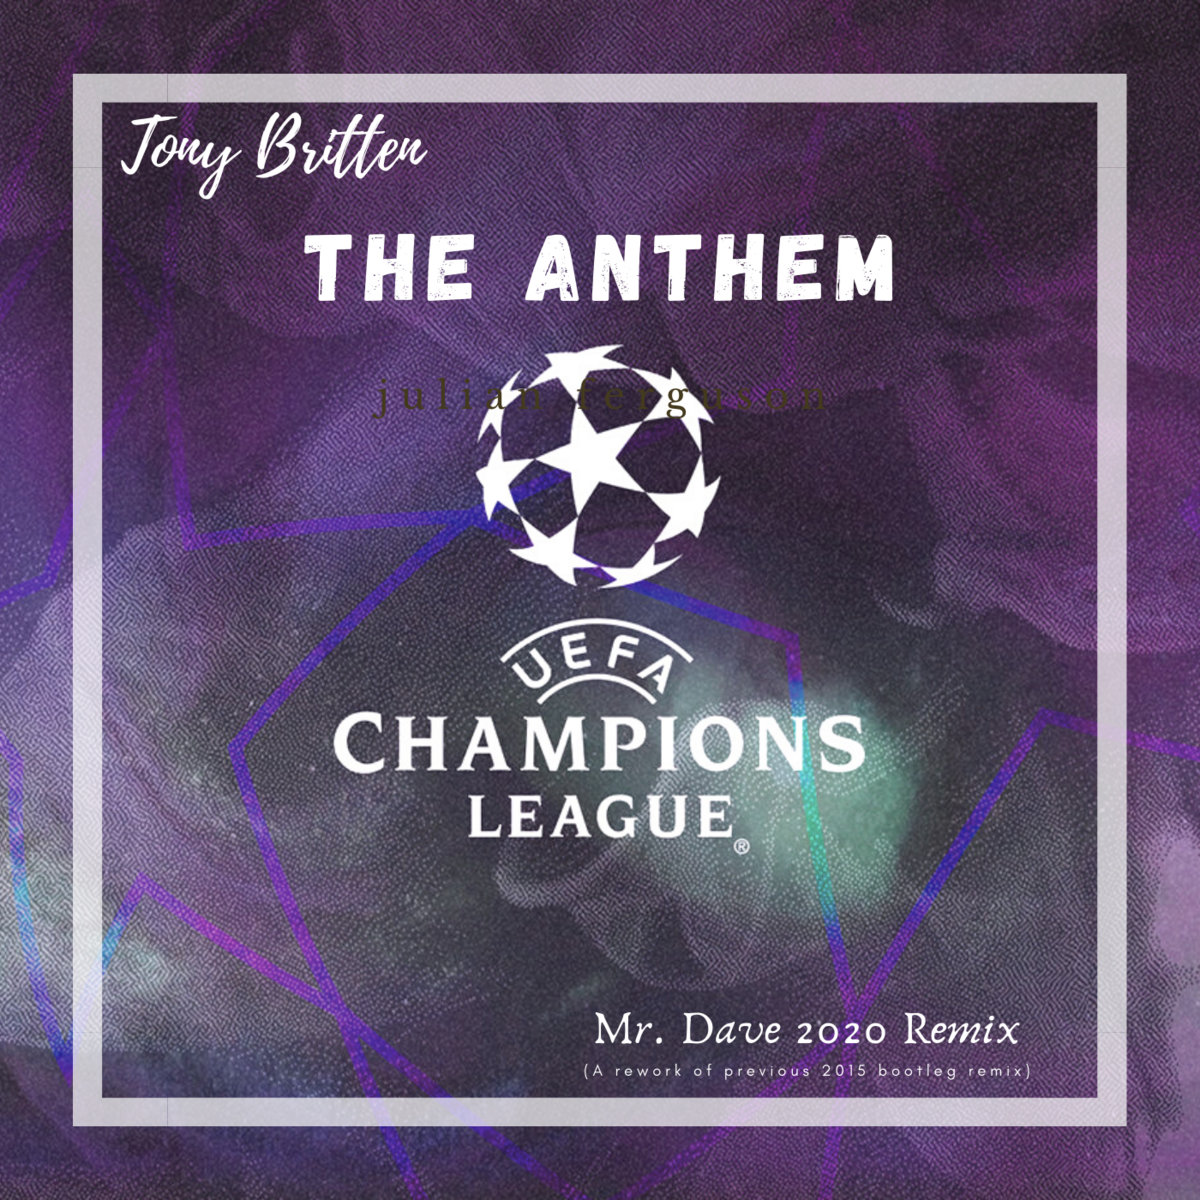 Гимн лиги чемпионов уефа. Гимн Лиги чемпионов УЕФА Тони Бриттен. Champions League Anthem Soundtrack 2013 14.